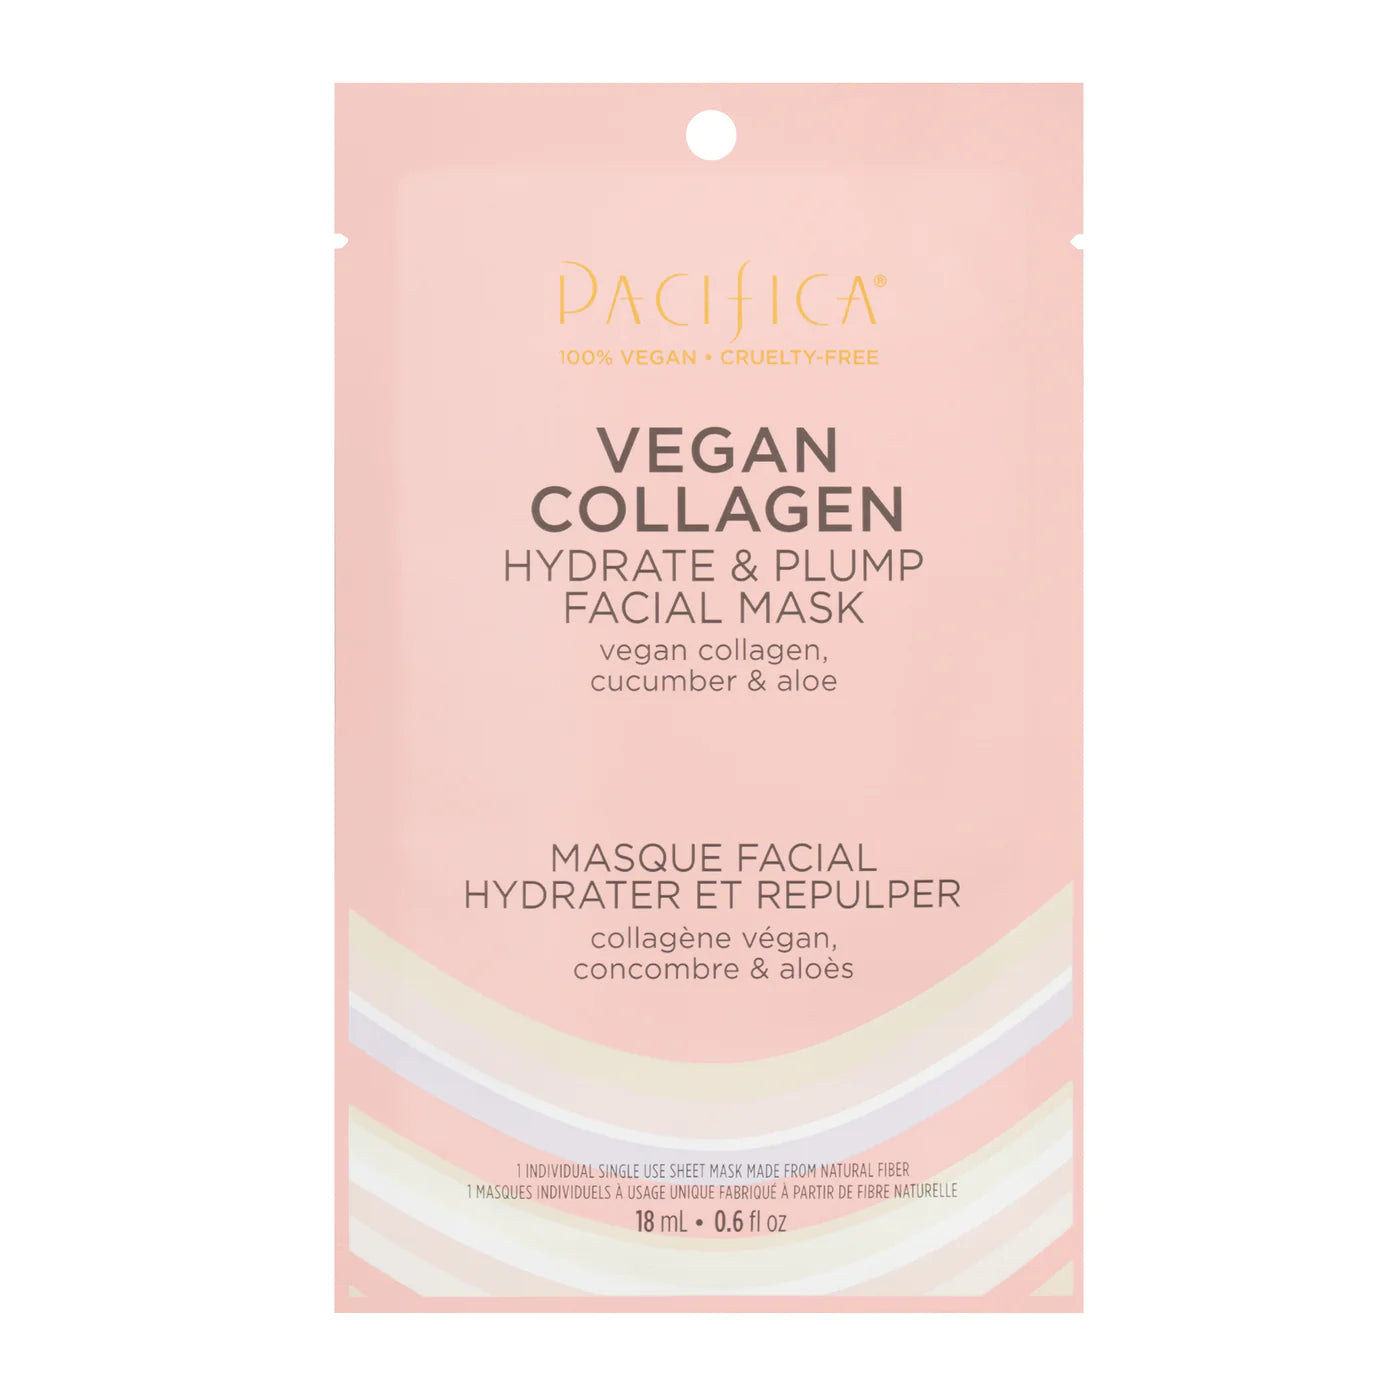 Vegan Collagen Hydrate & Plump Facial Mask